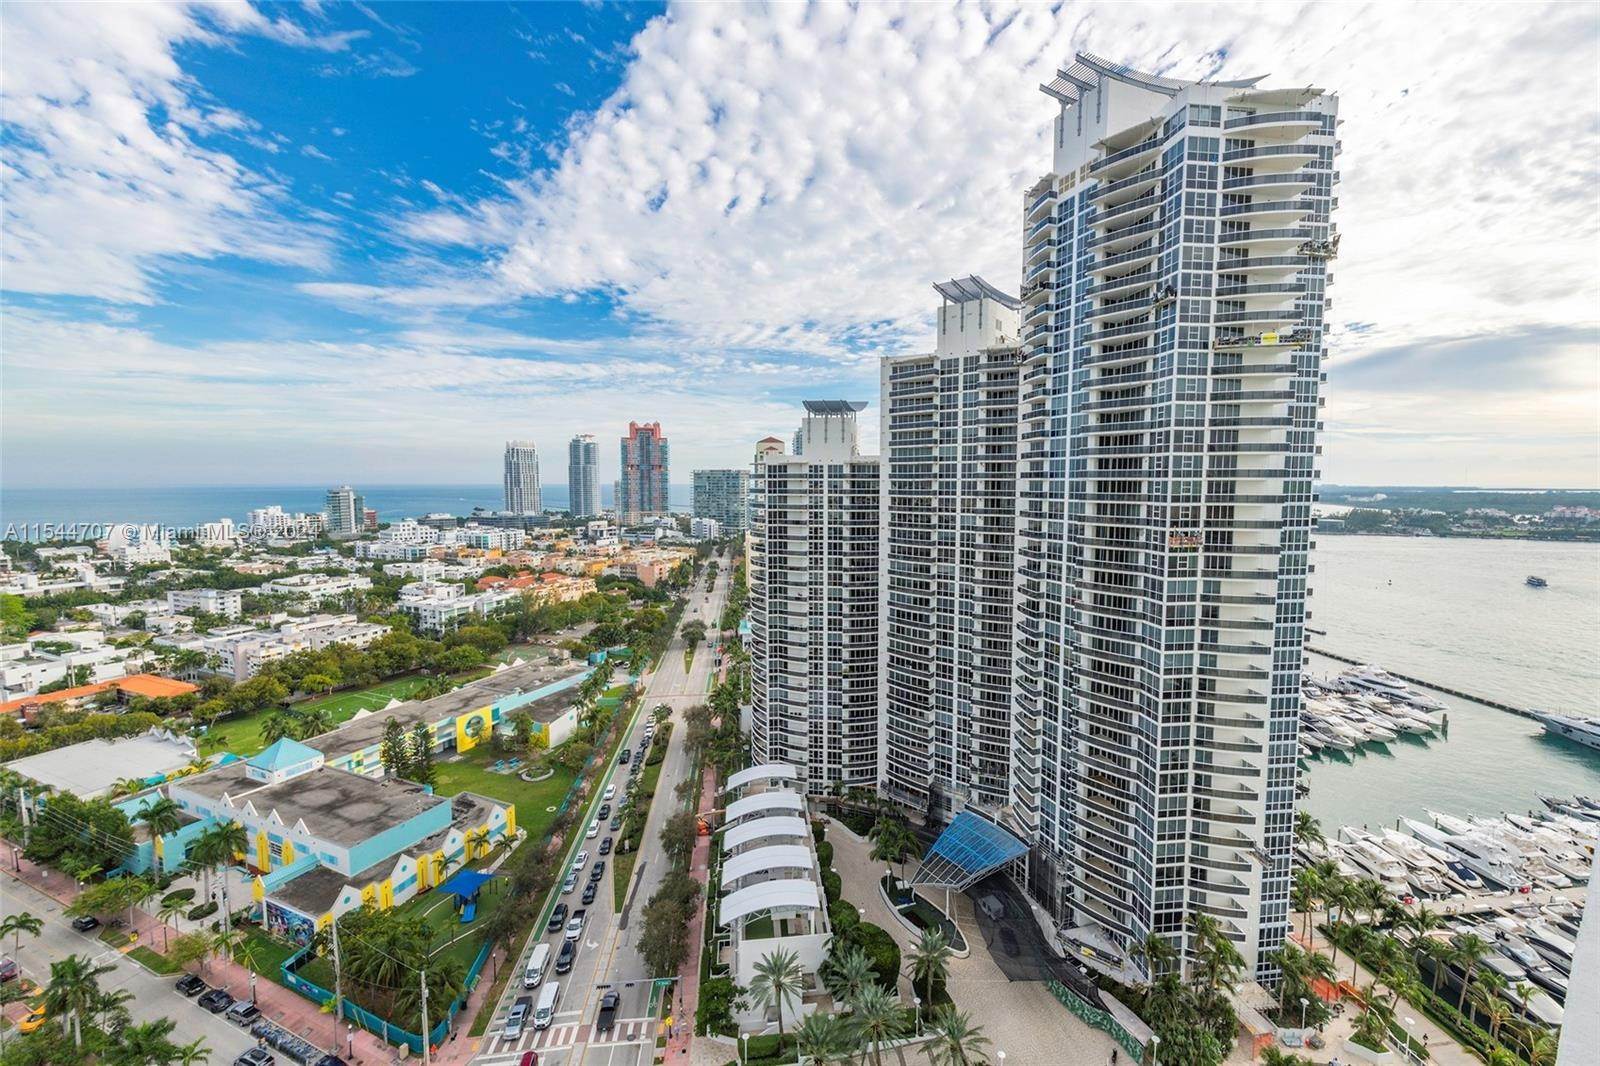 Condominium for Sale at South of Fifth, Miami Beach, FL 33139